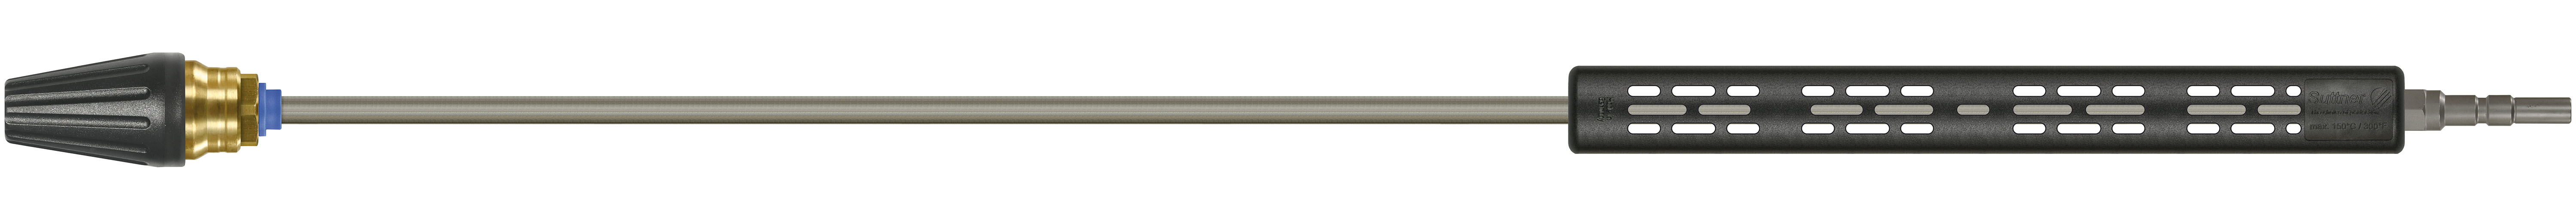 Rotabuse céramique avec lance 1000mm, 200-400 bar, Calibre 040